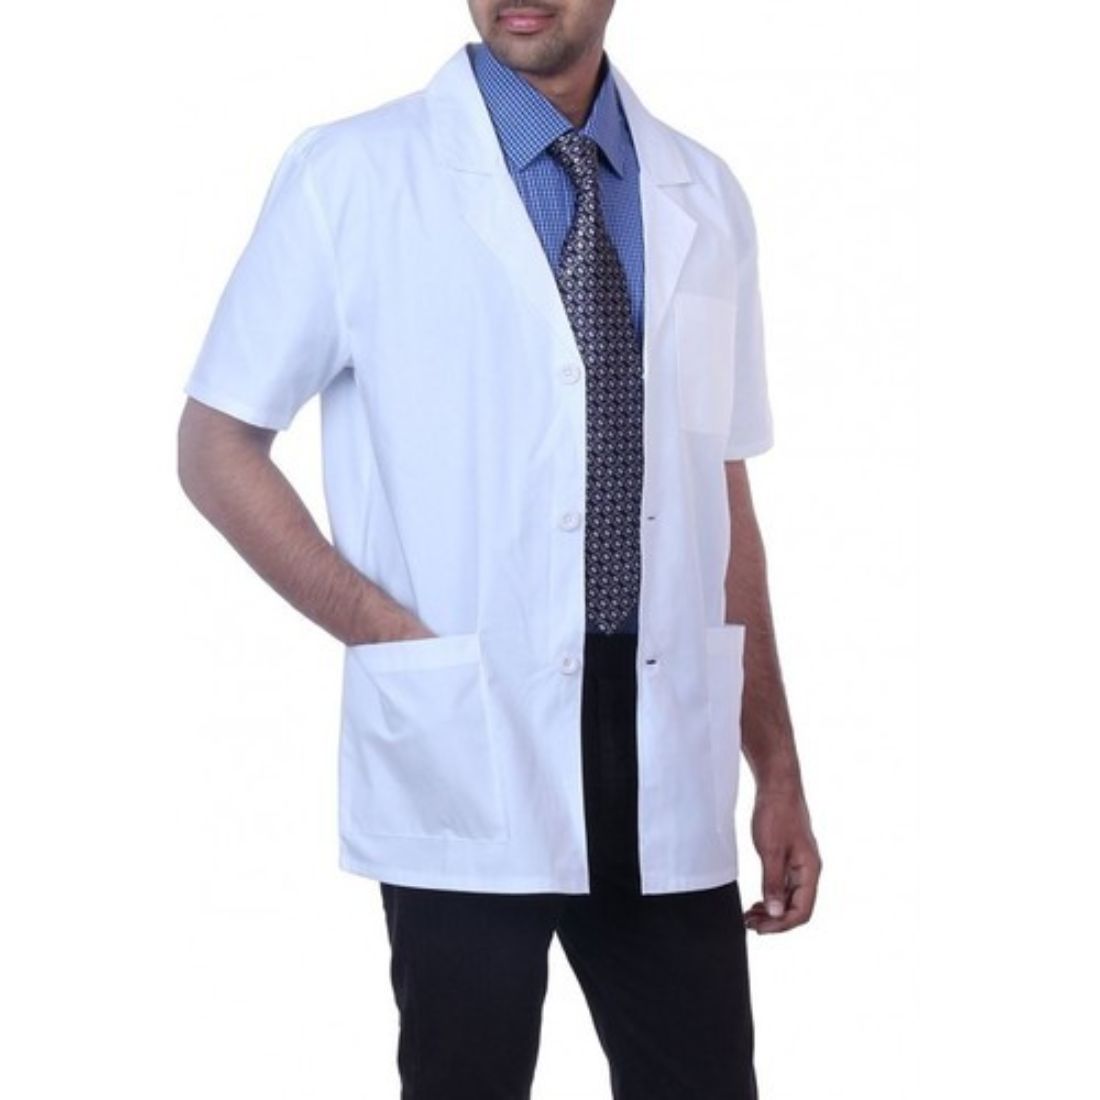 Doctor Coat / Lab Coat (Half Sleeves)